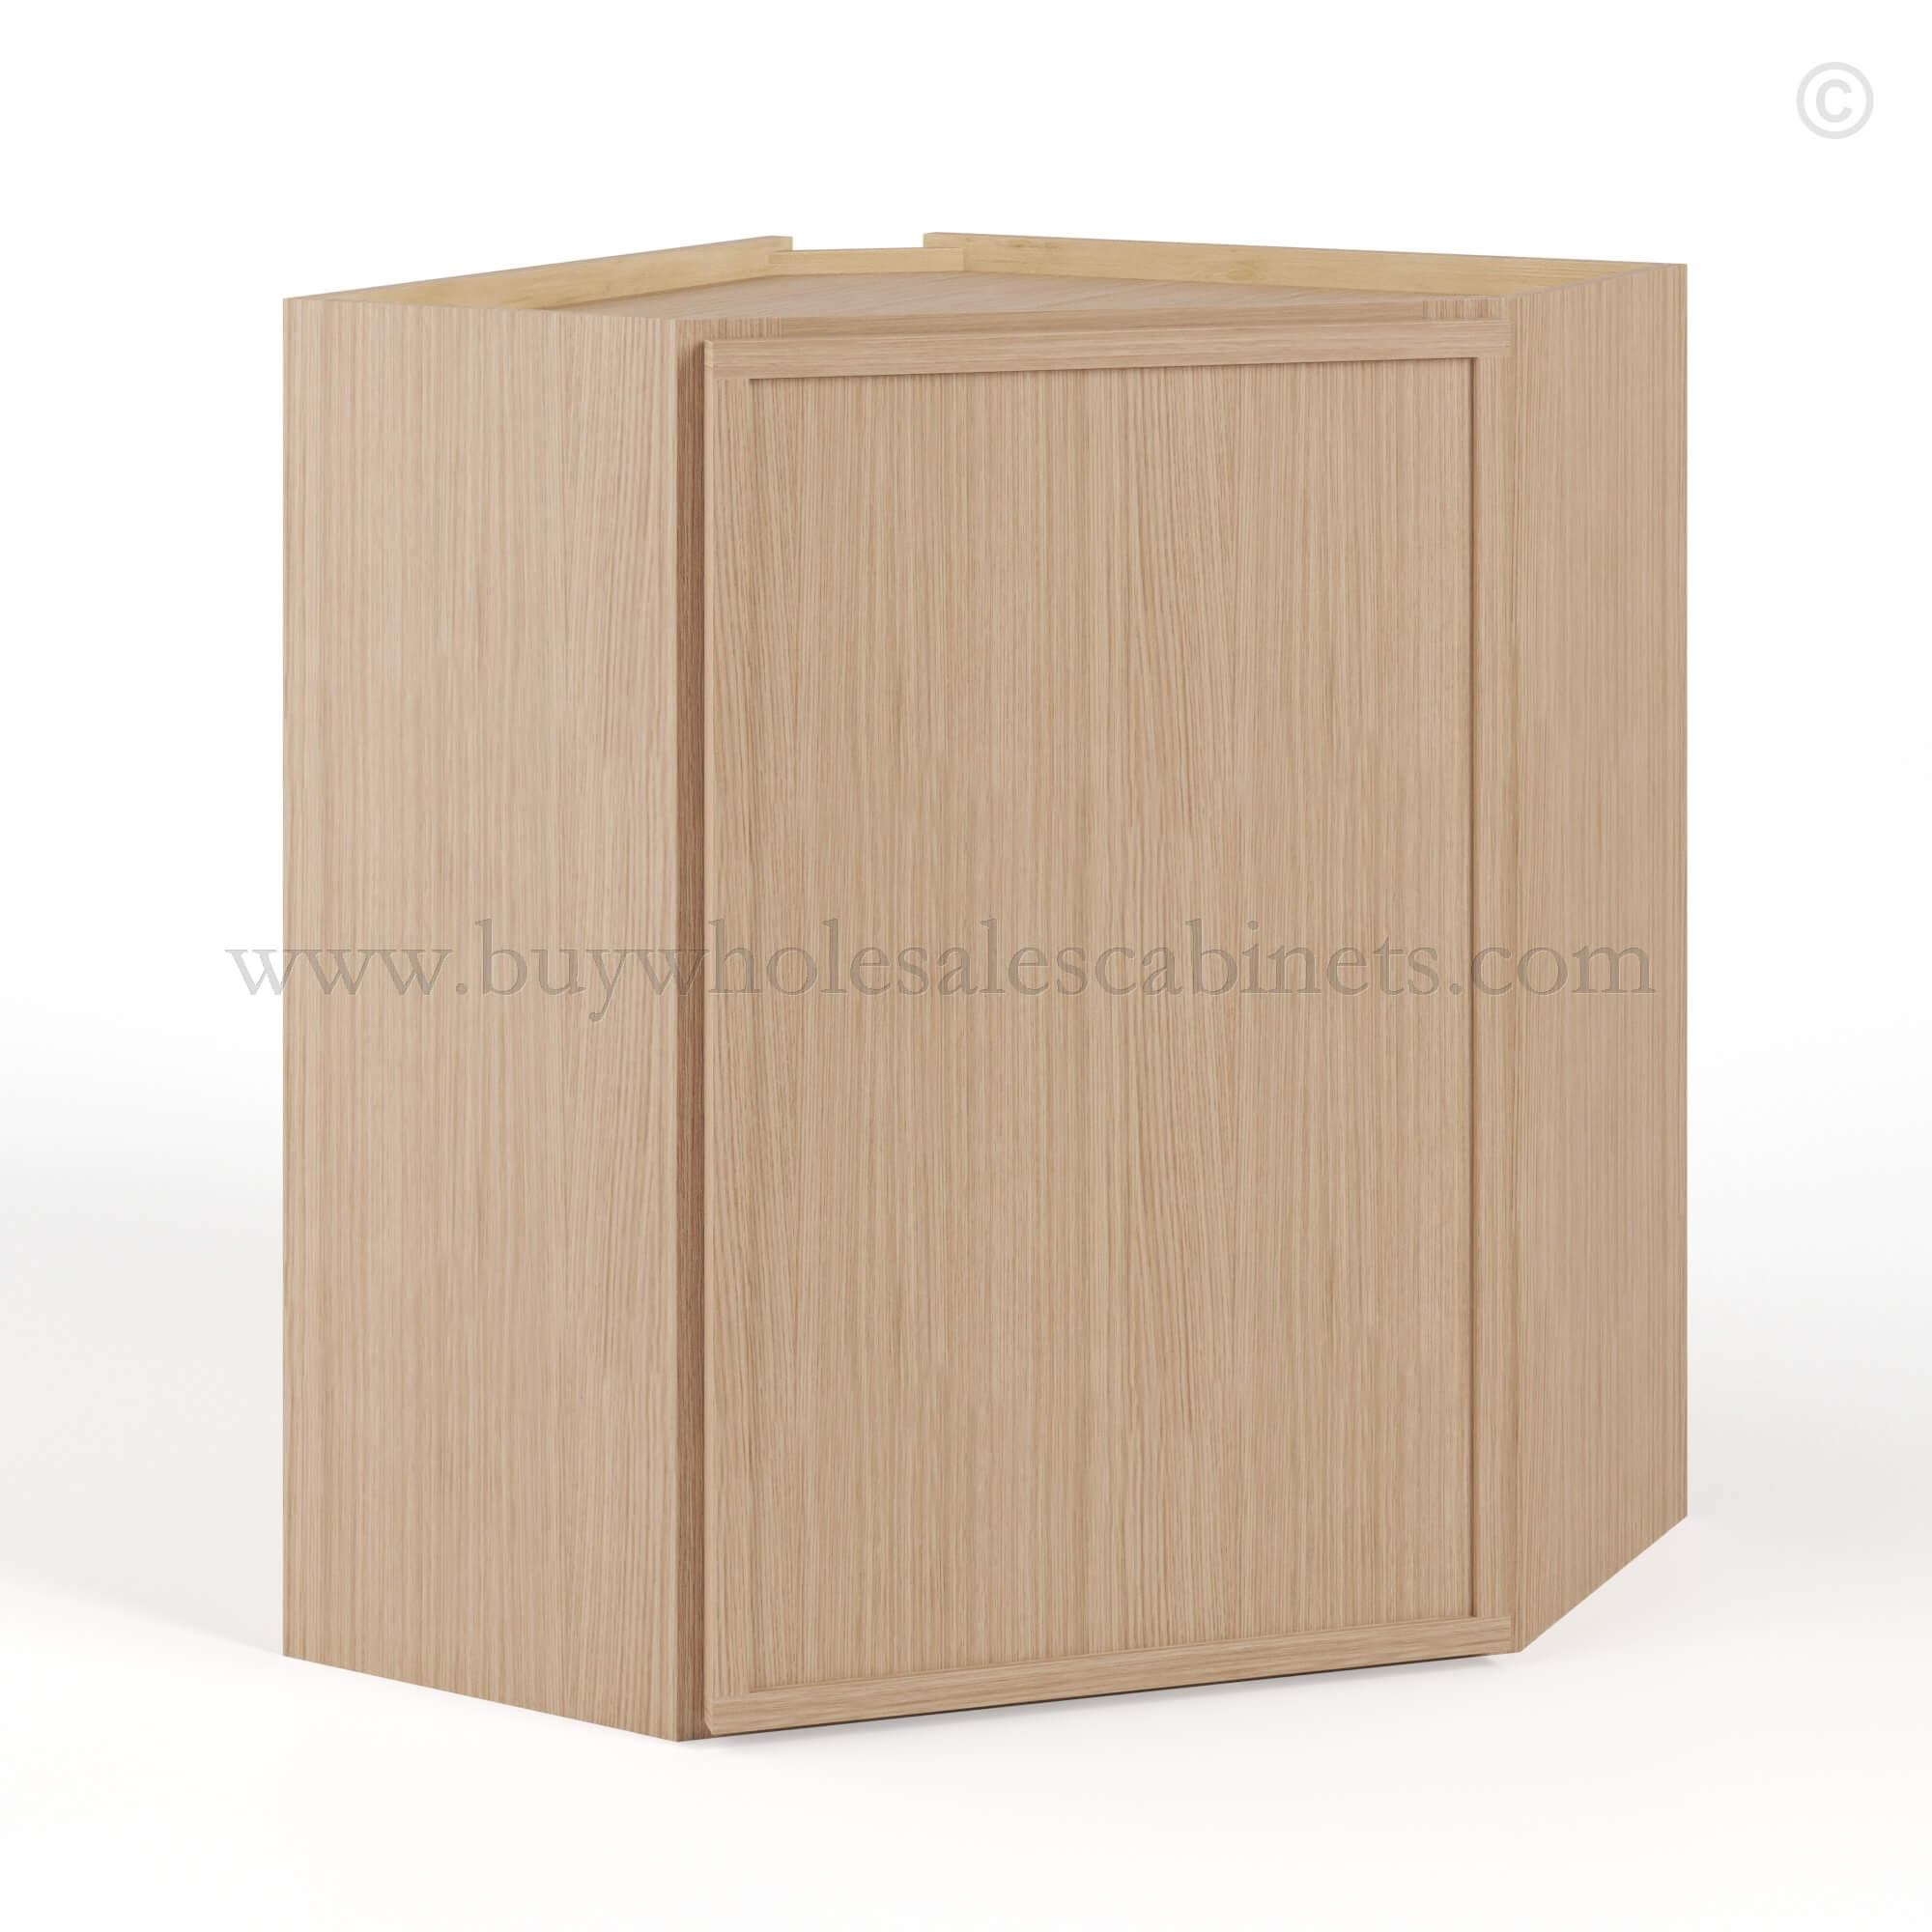 Slim Oak Shaker Diagonal Corner Wall Cabinet, rta cabinets, wholesale cabinets